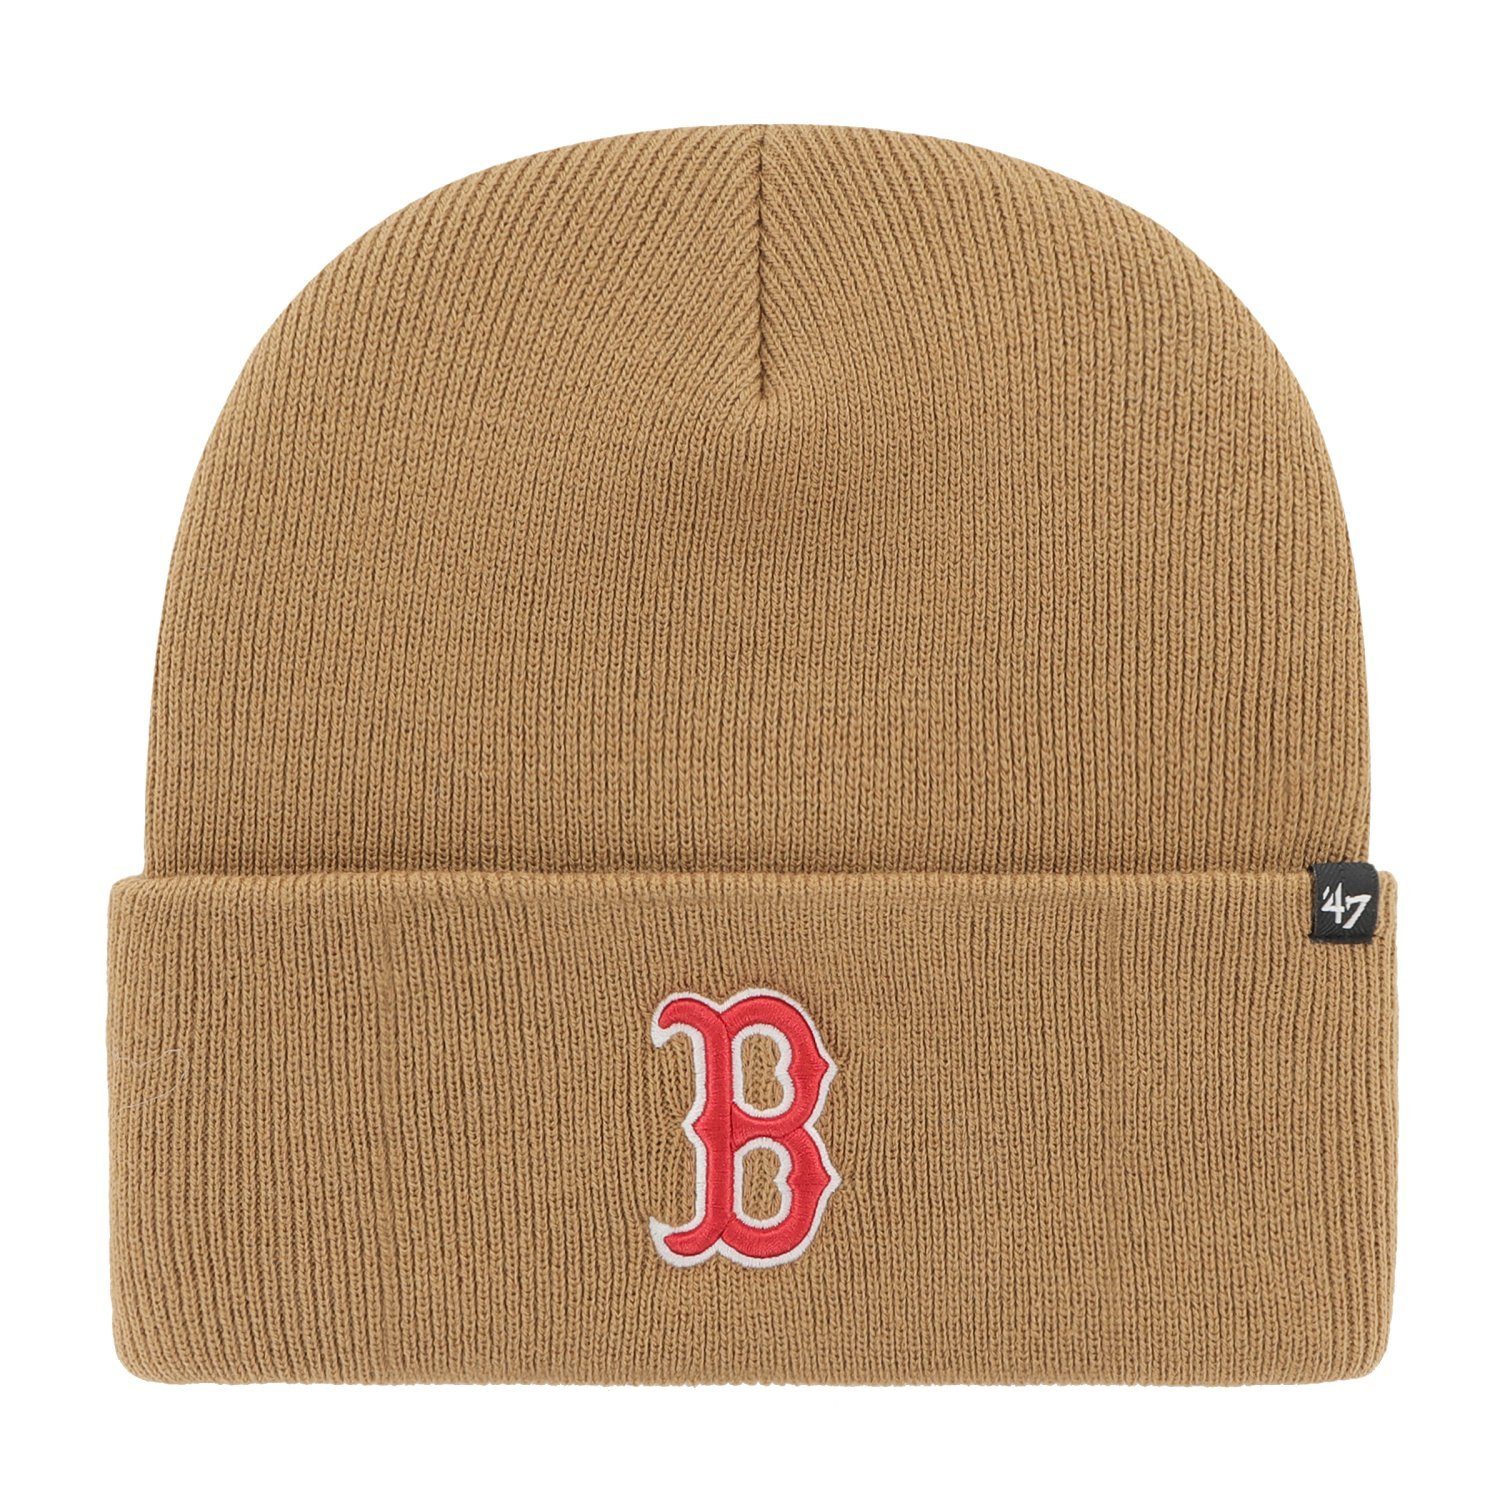 '47 Brand Fleecemütze Beanie HAYMAKER Boston Red Sox